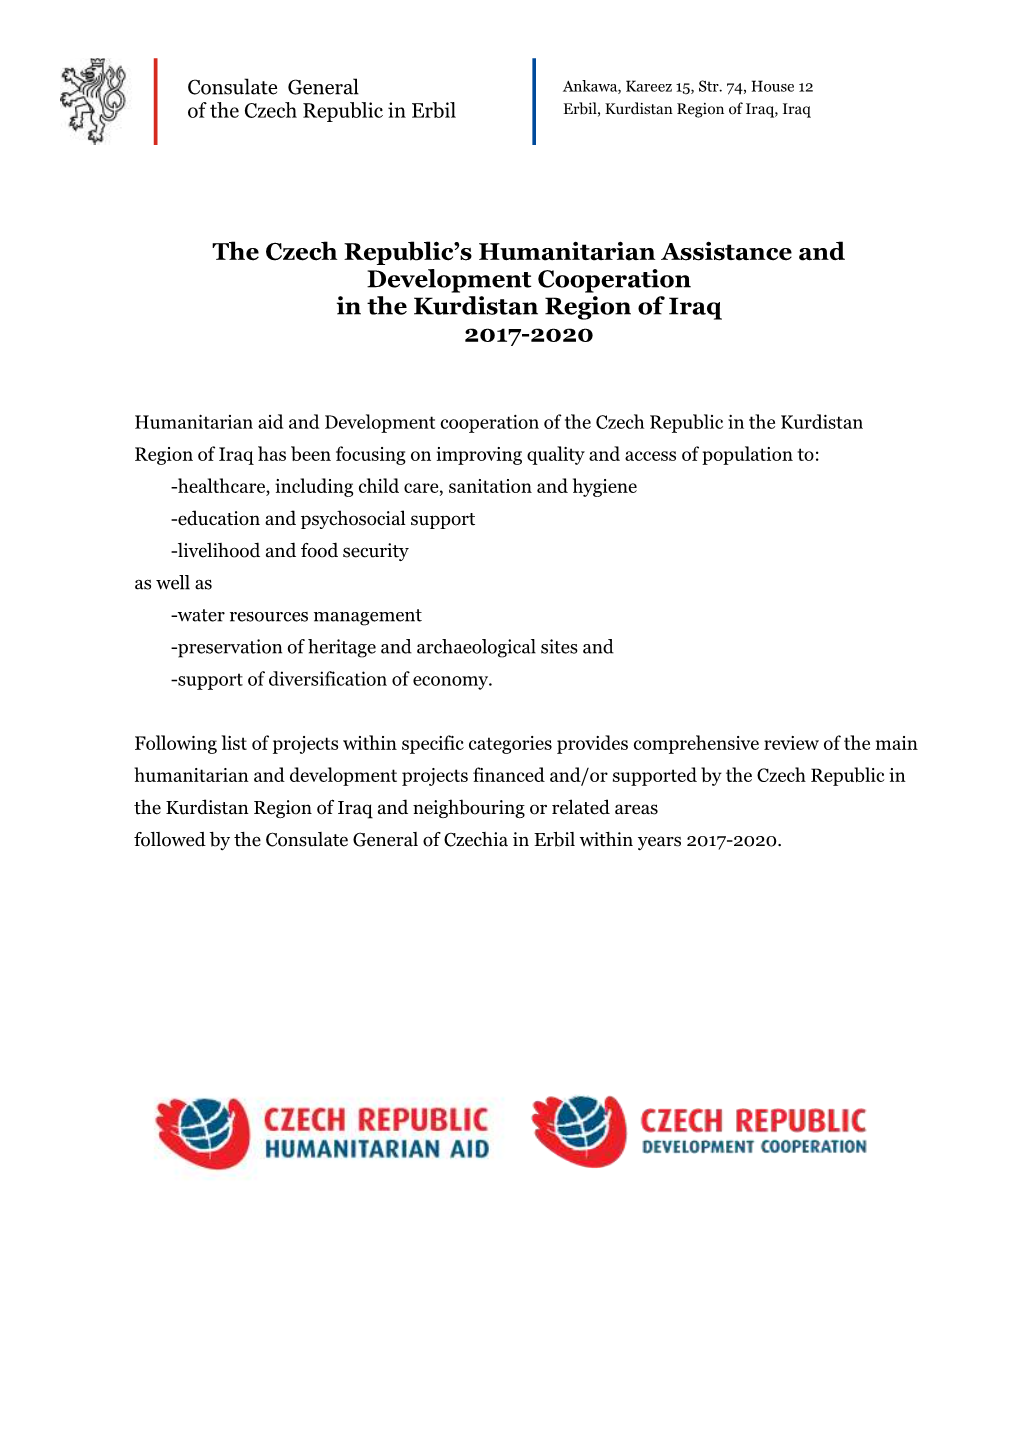 Czech Republic Humanitarian Aid and Development